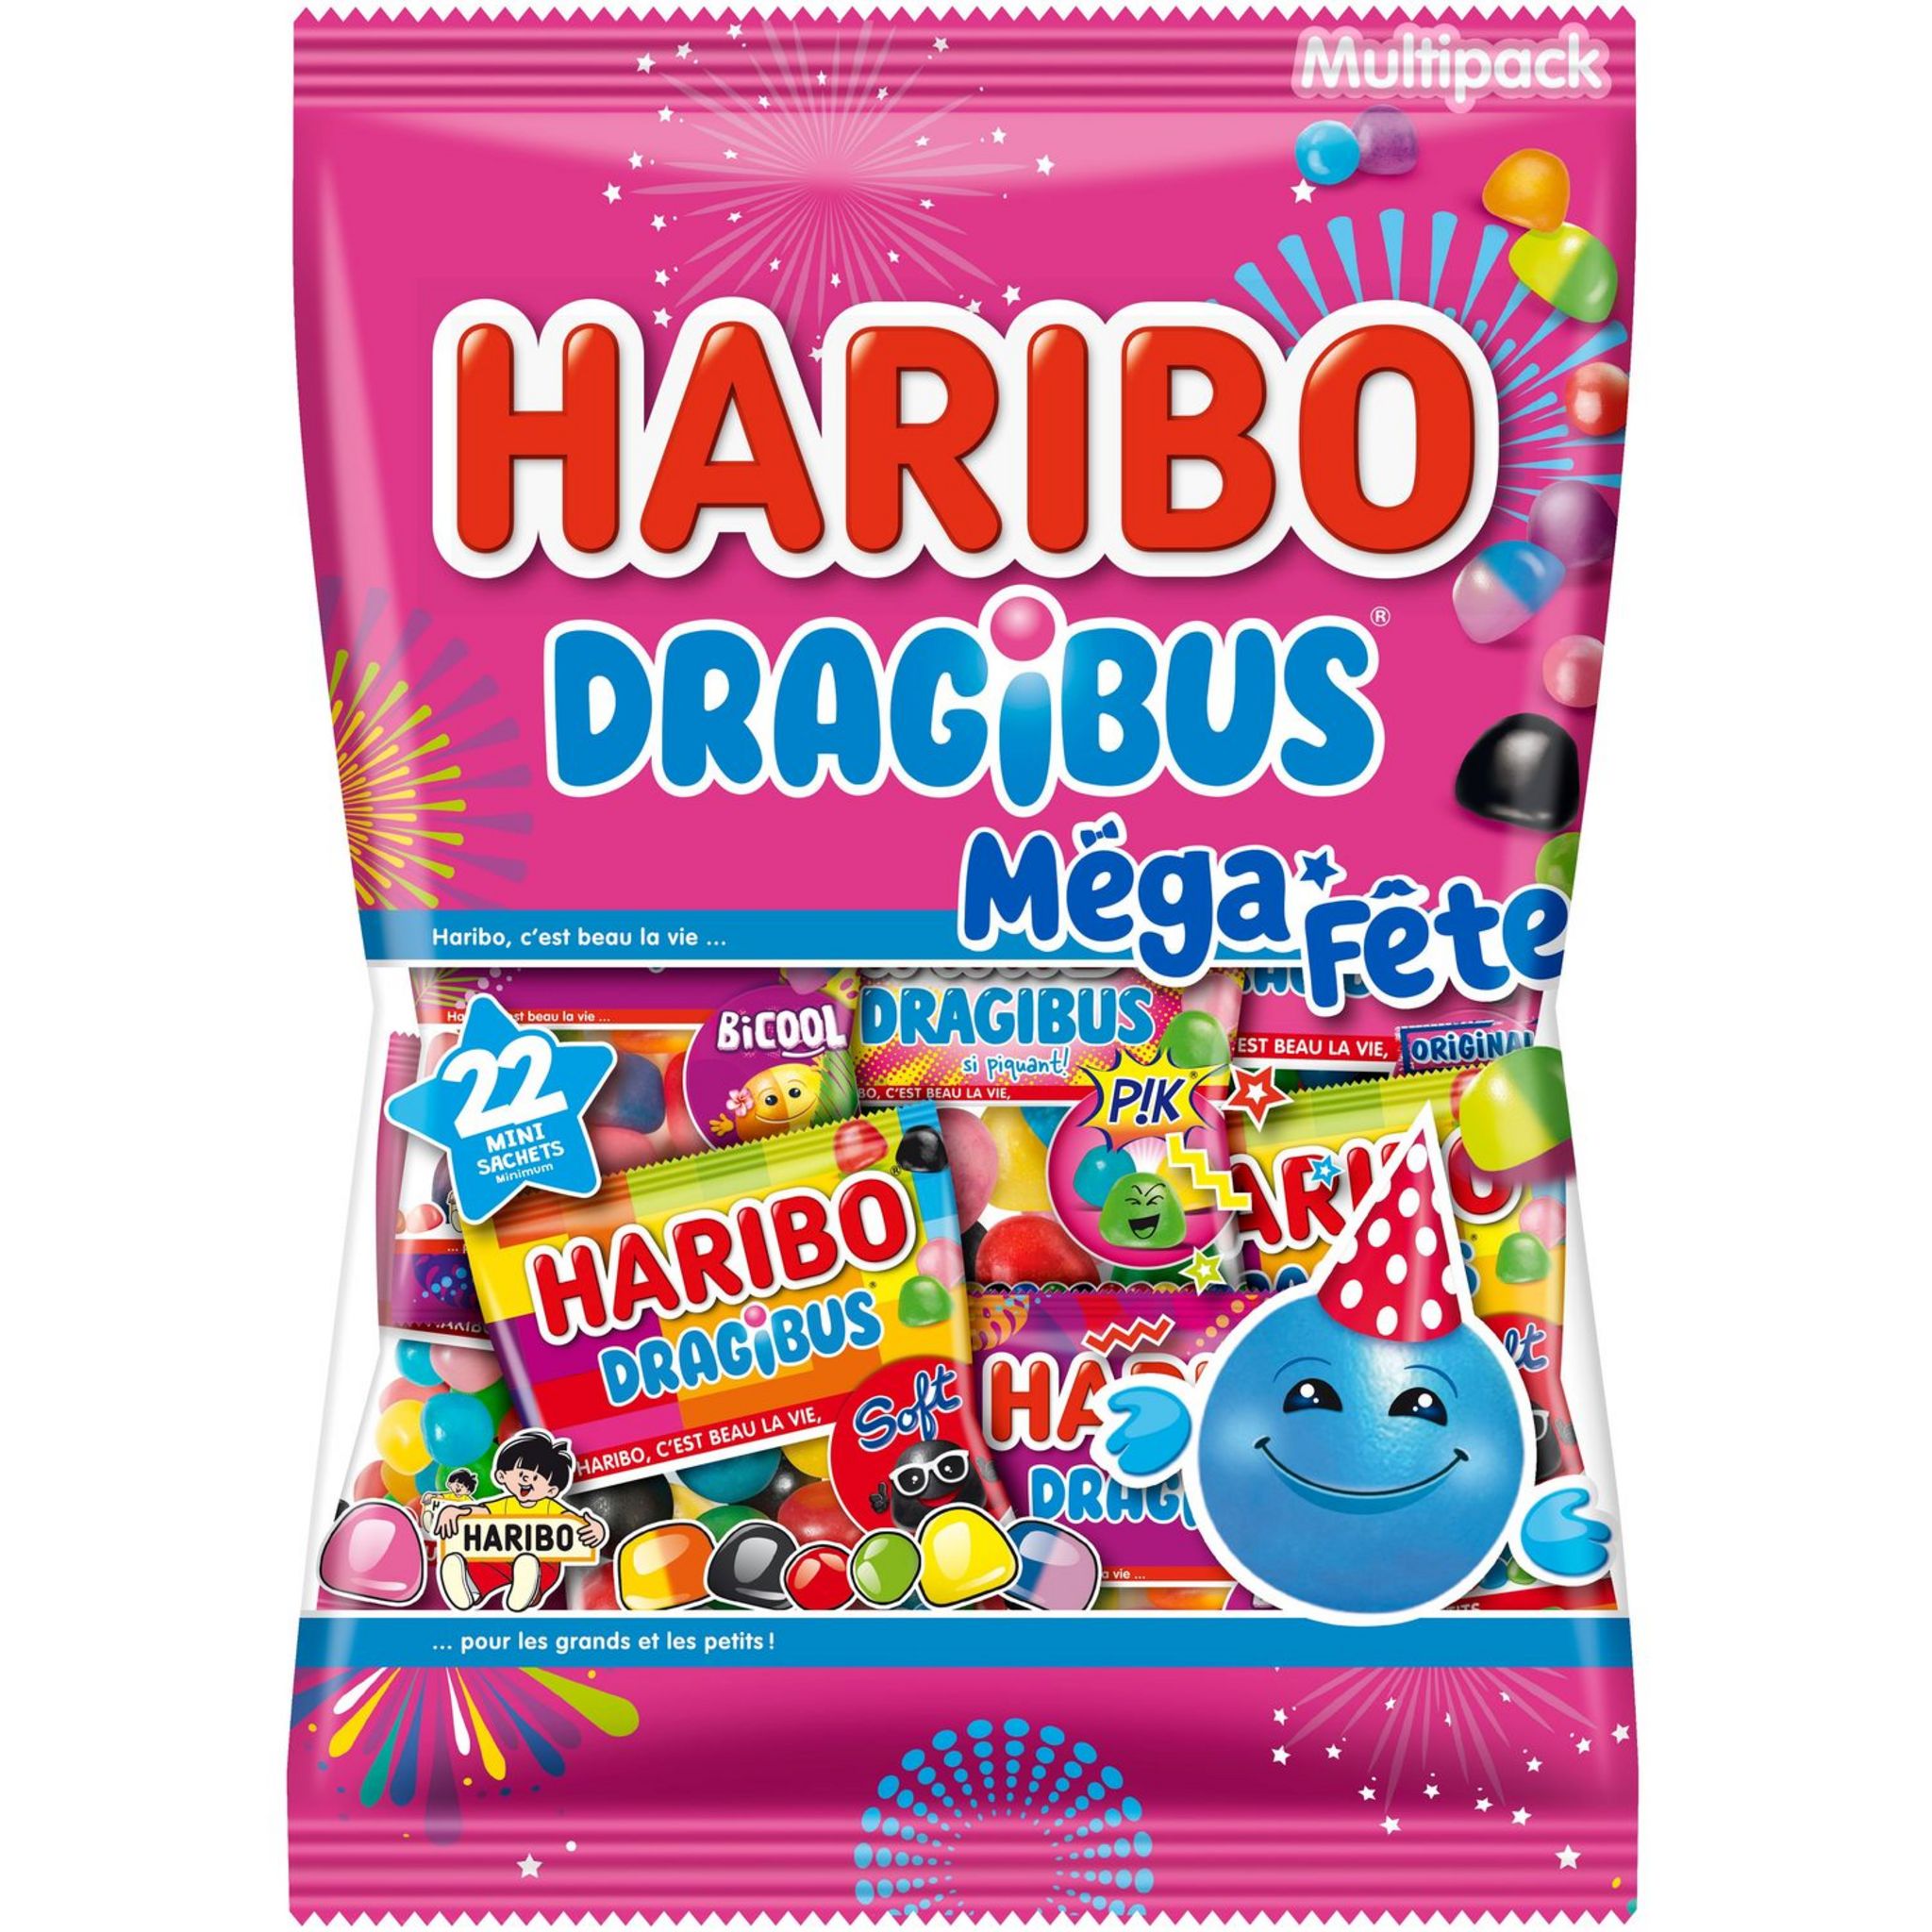 HARIBO Méga fête Bonbons dragibus en mini sachets 22 sachets 960g pas cher  